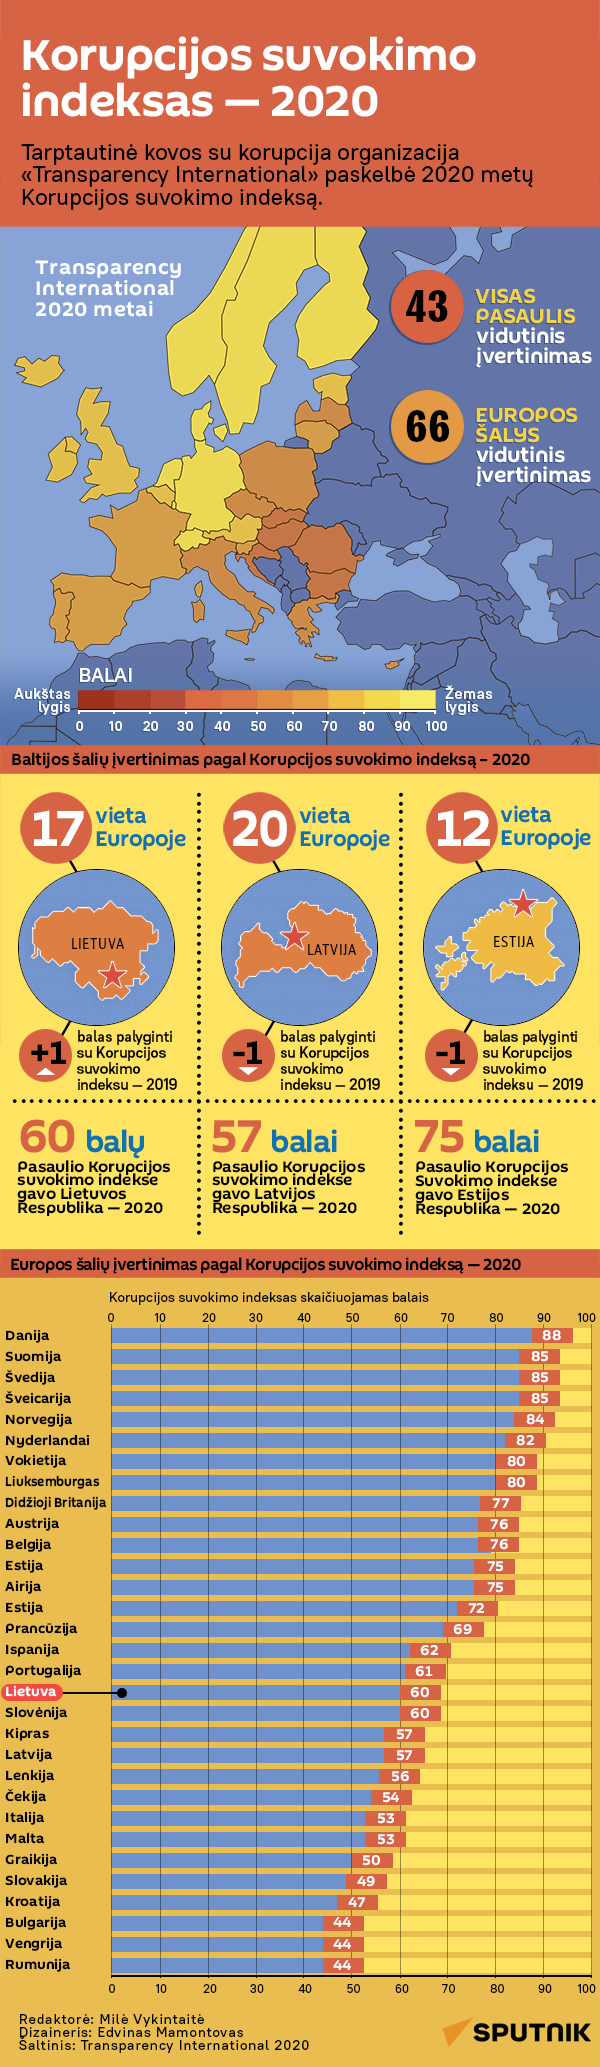 Korupcijos suvokimo indeksas — 2020 - Sputnik Lietuva